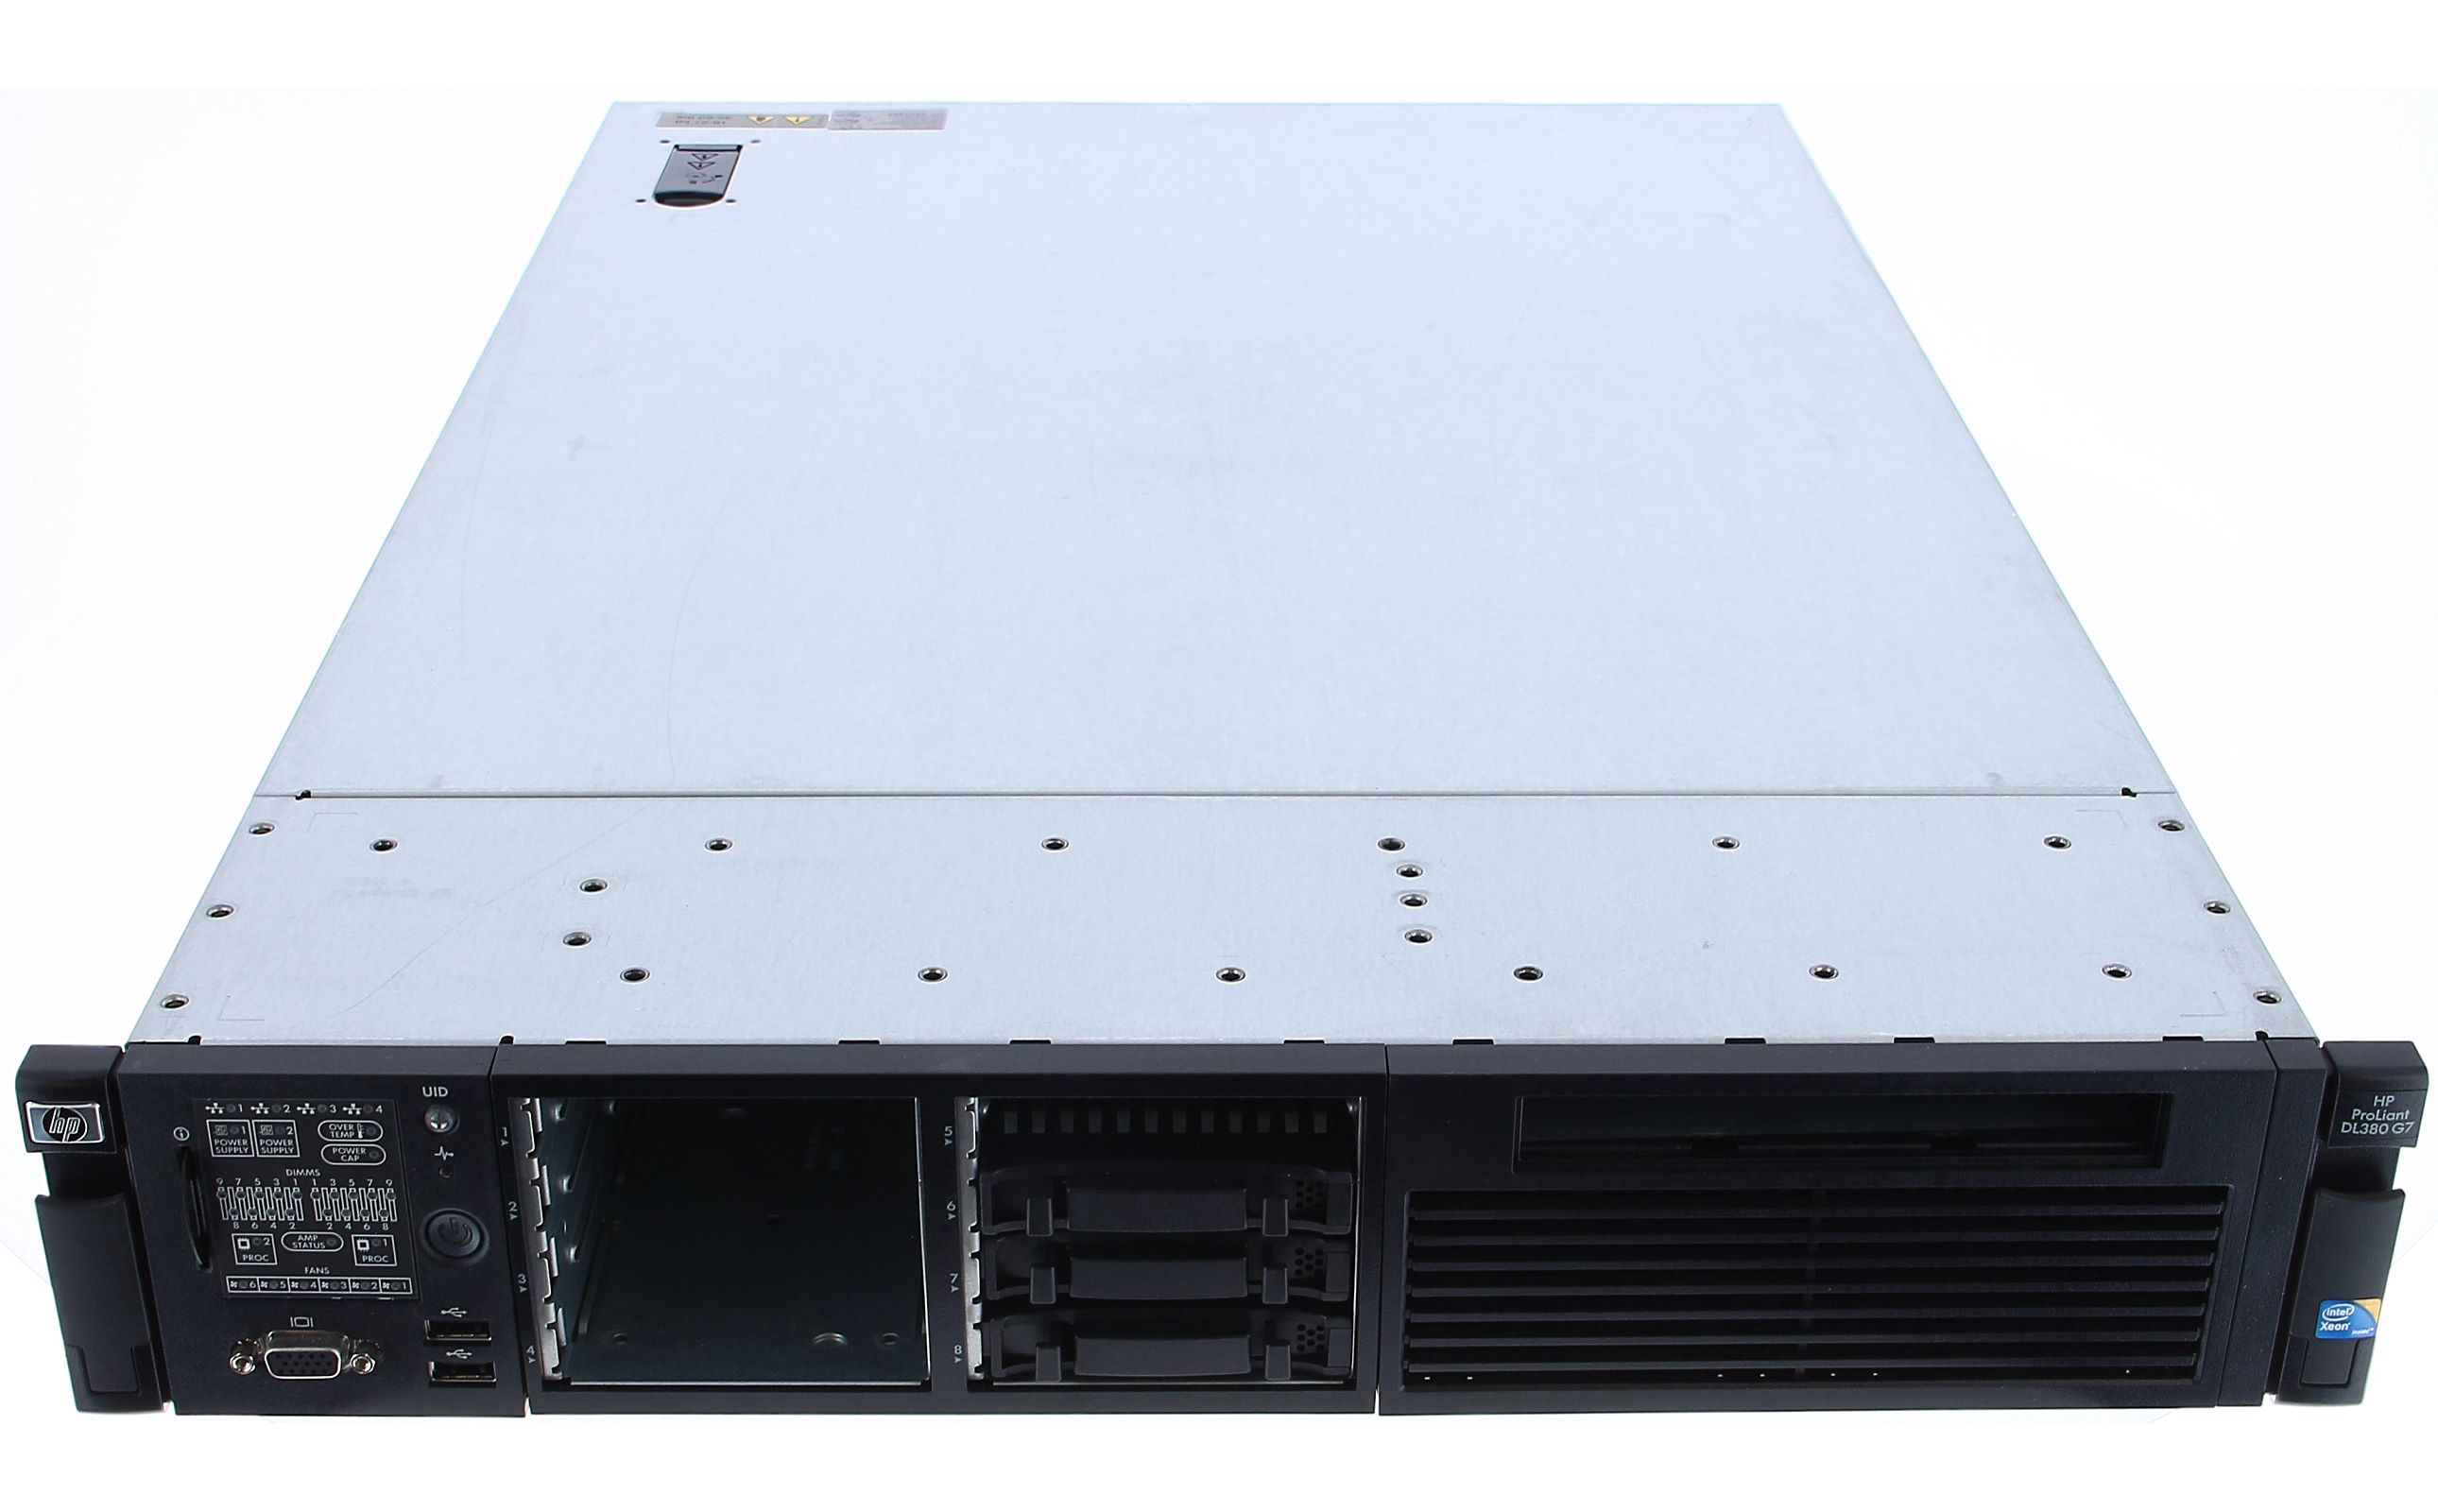 pakke komme til syne Fordøjelsesorgan HP DL380 G7 SSF Server,2x X5650,16GB (2x8GB) DDR3 RAM,no HDD,2xPSU